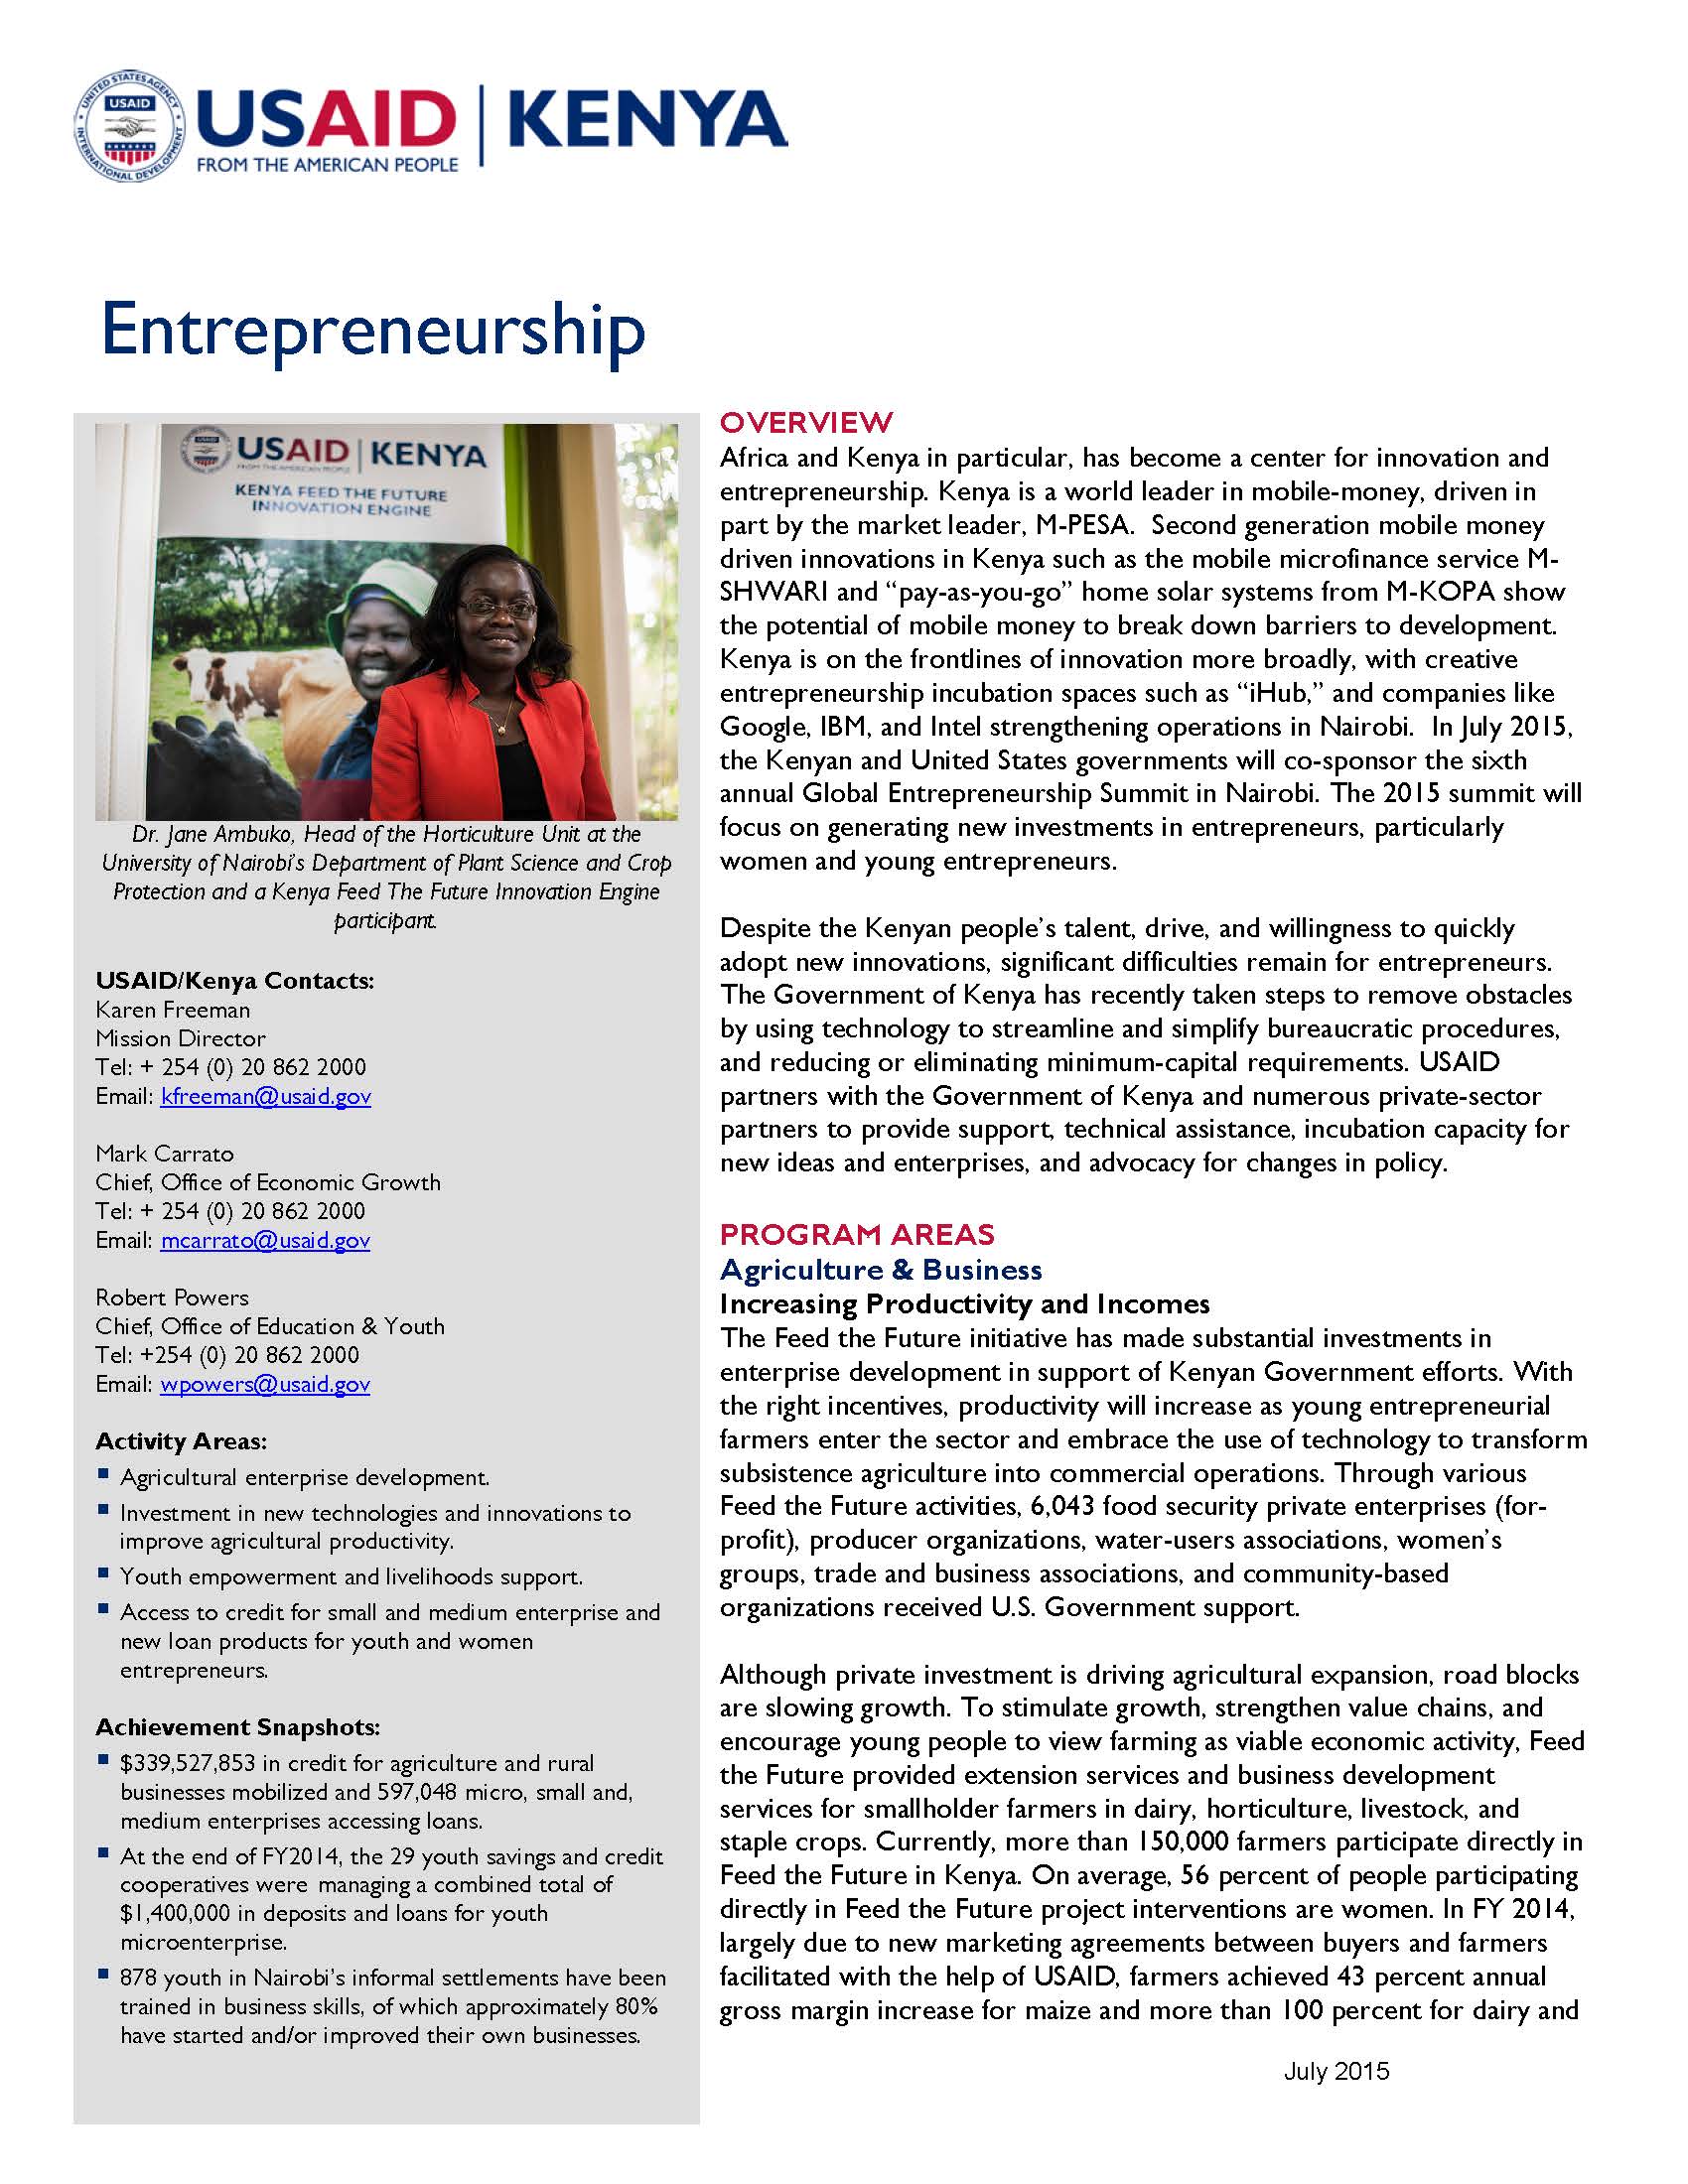 Entrepreneurship Fact Sheet